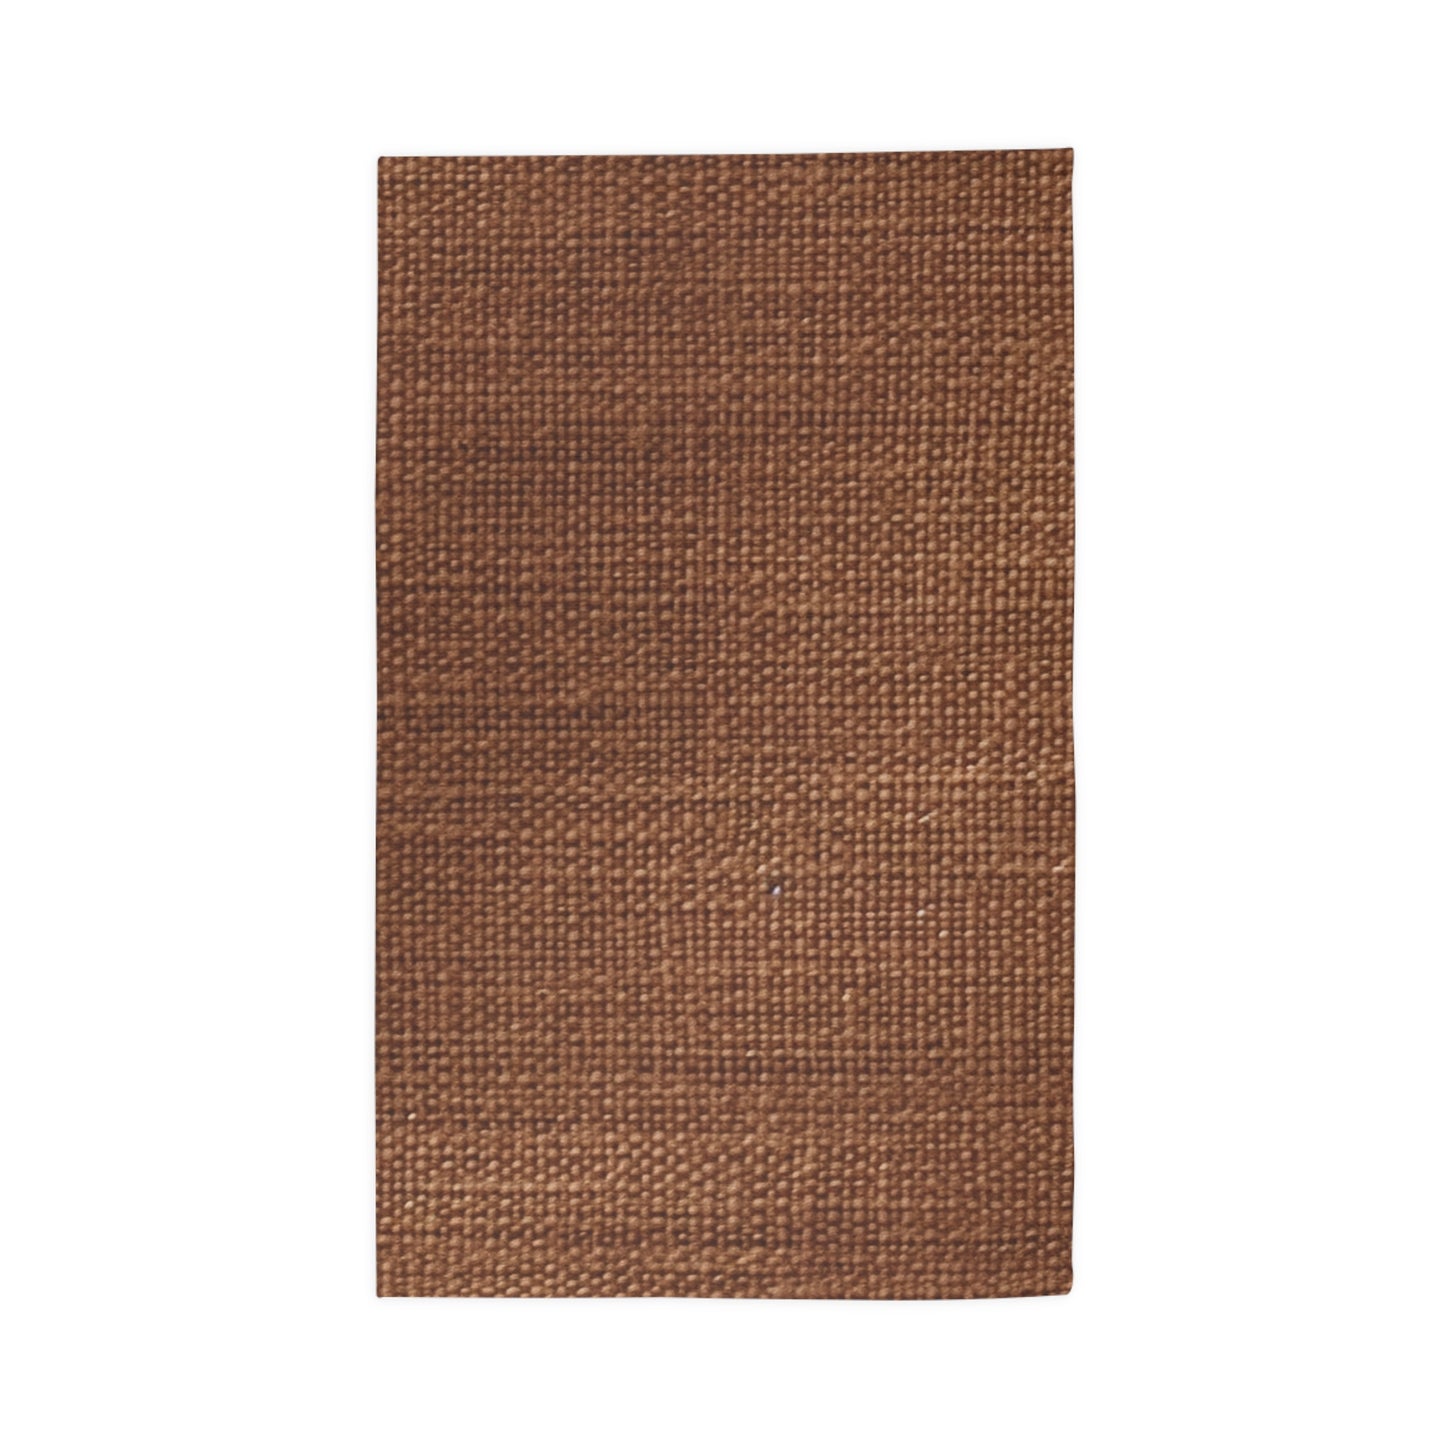 Luxe Dark Brown: Denim-Inspired, Distinctively Textured Fabric - Dobby Rug